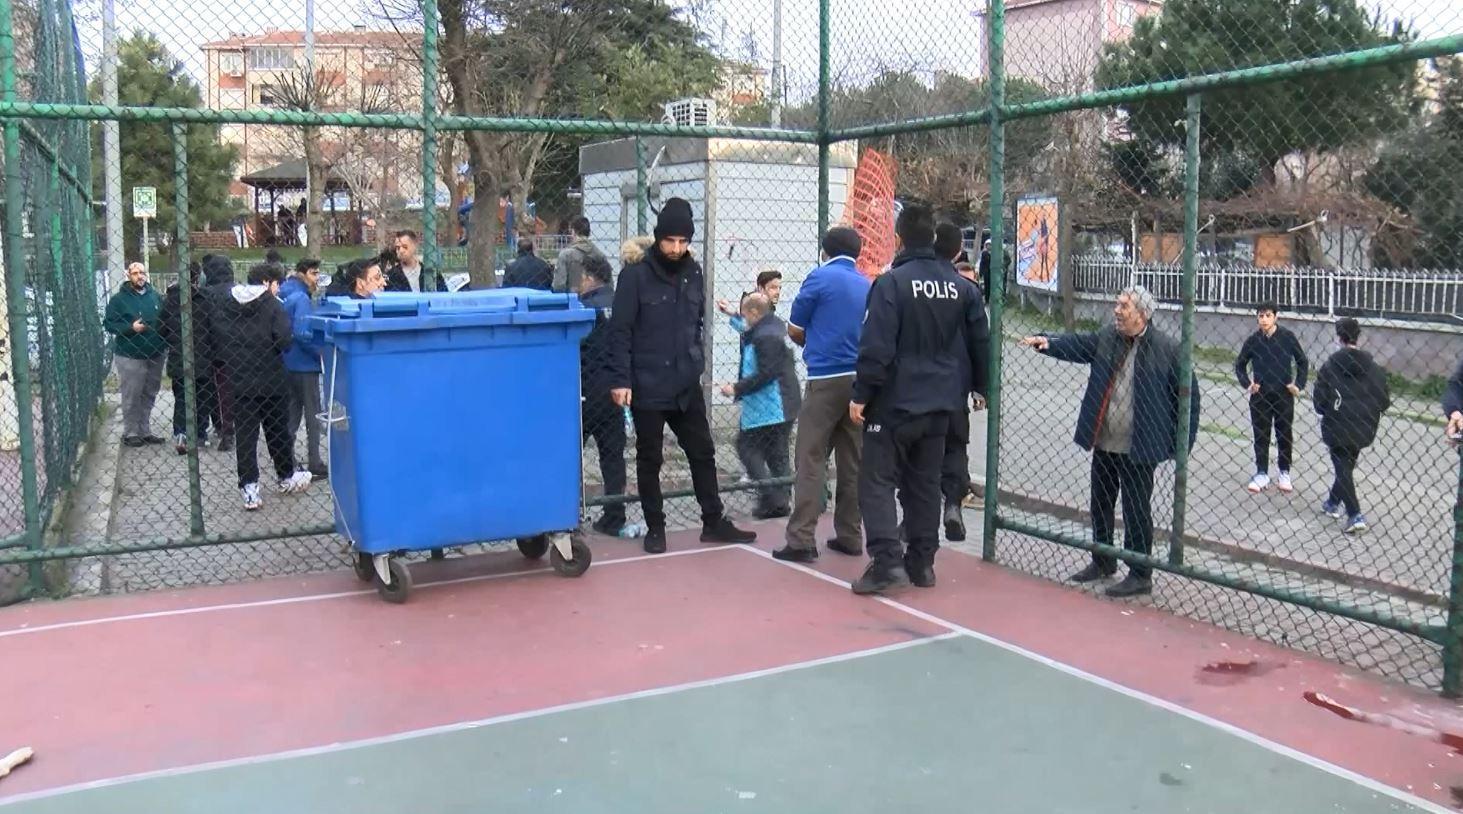 Sultangazide basketbol oynayanlara pitbull saldırısı: 2 yaralı